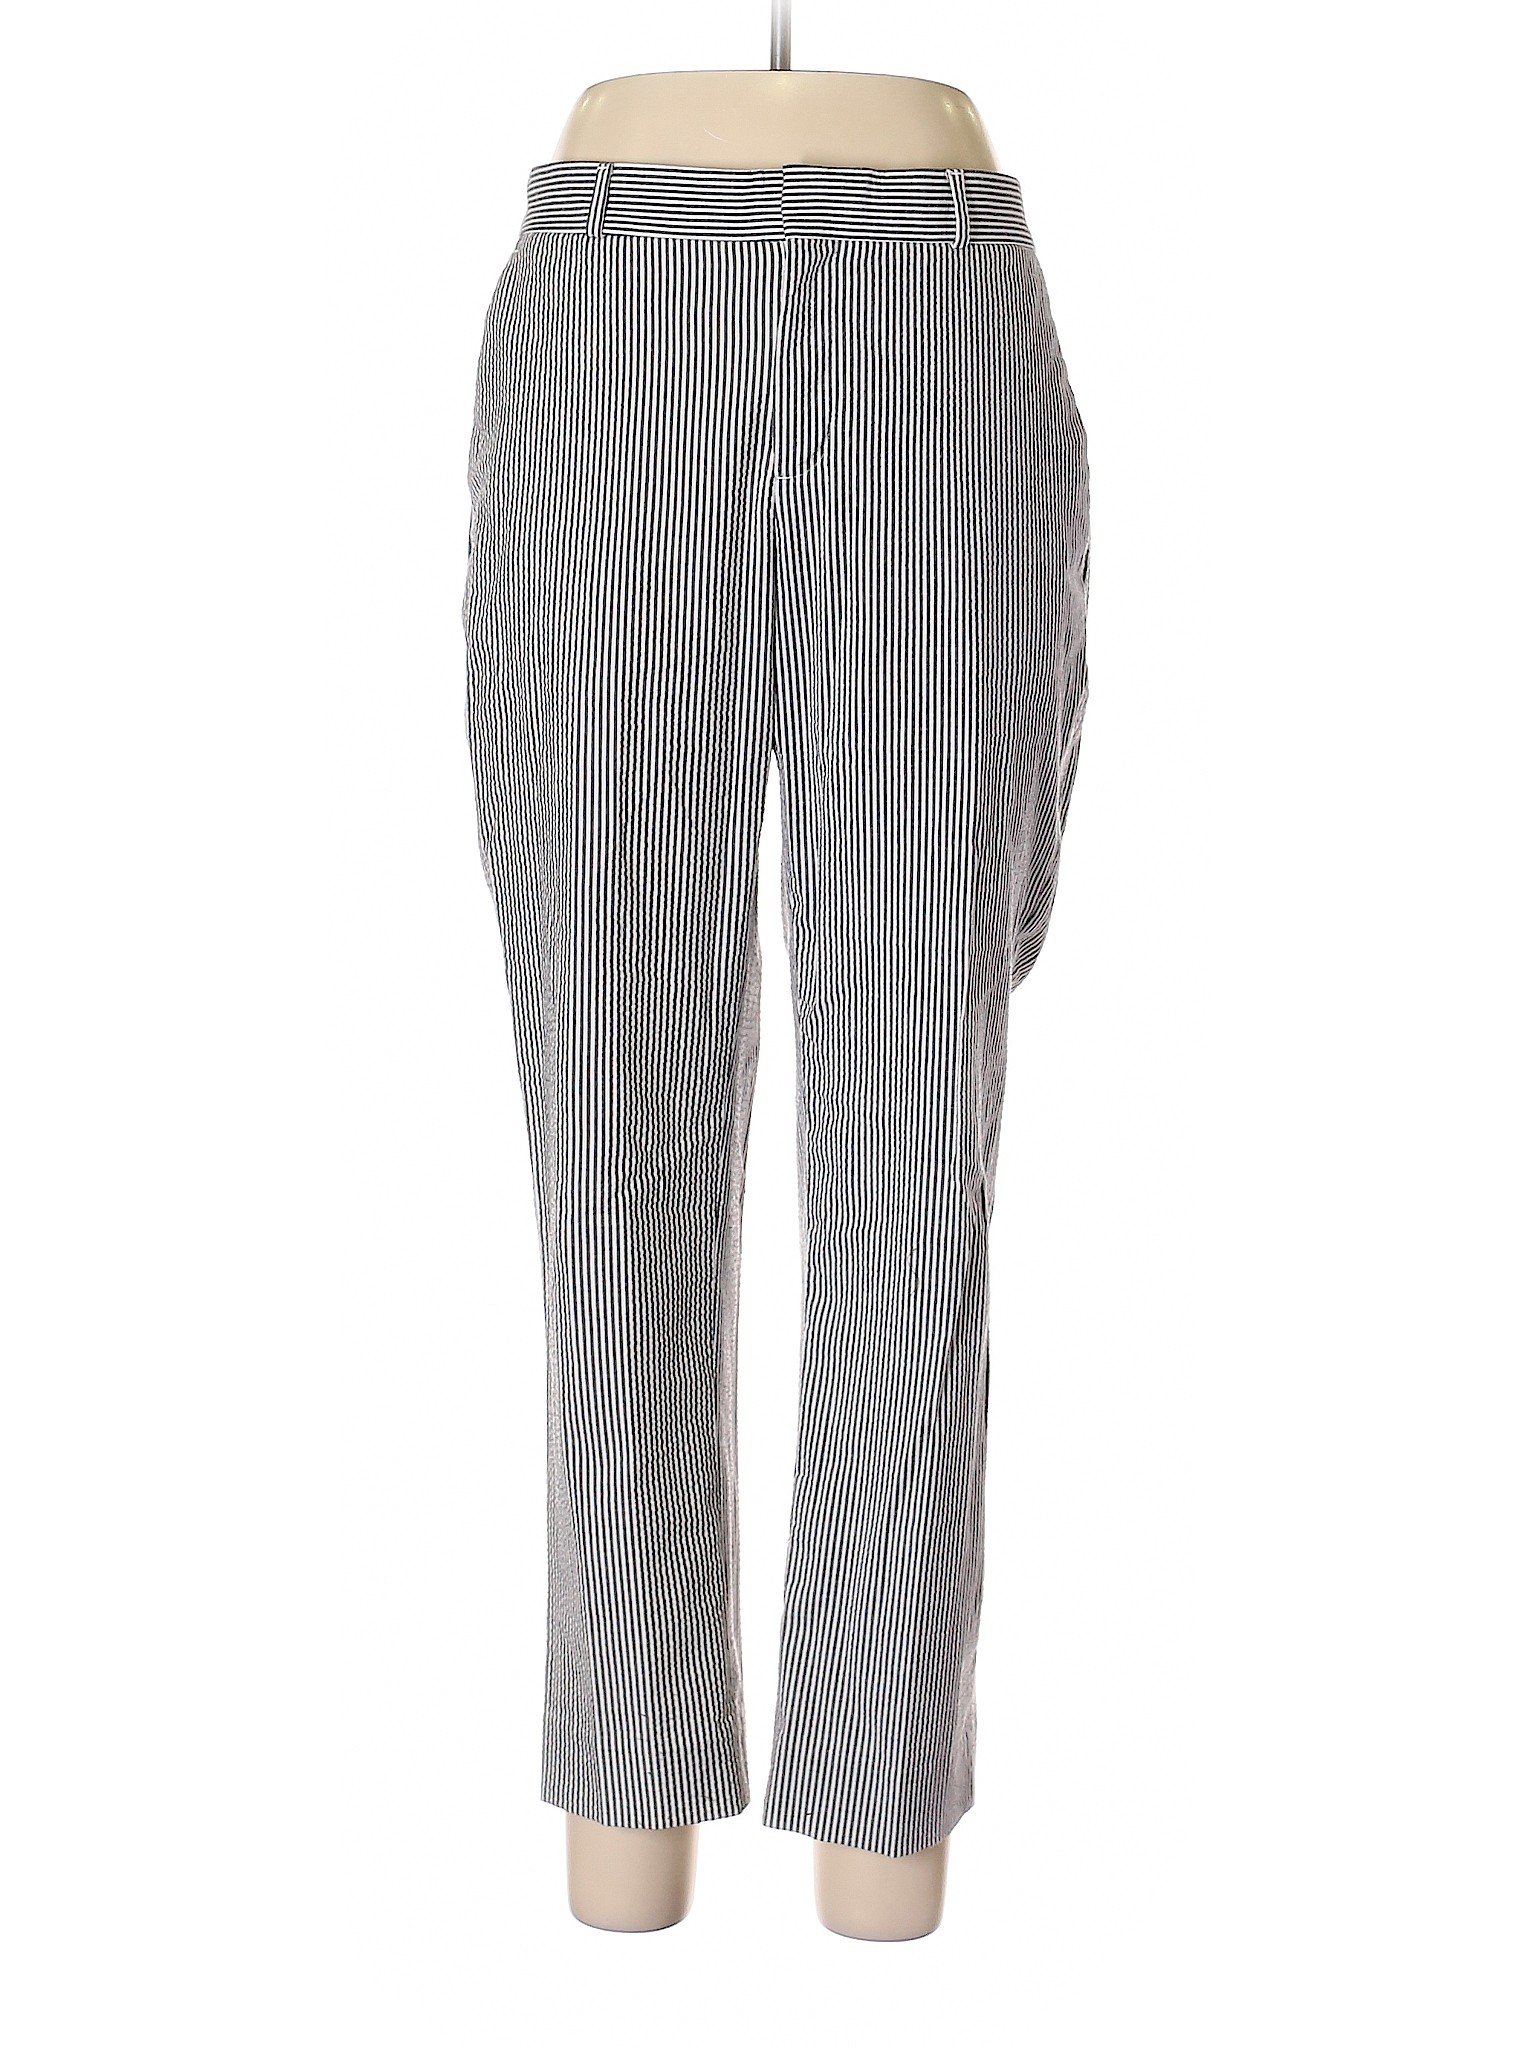 J.Crew Women Gray Casual Pants 10 | eBay